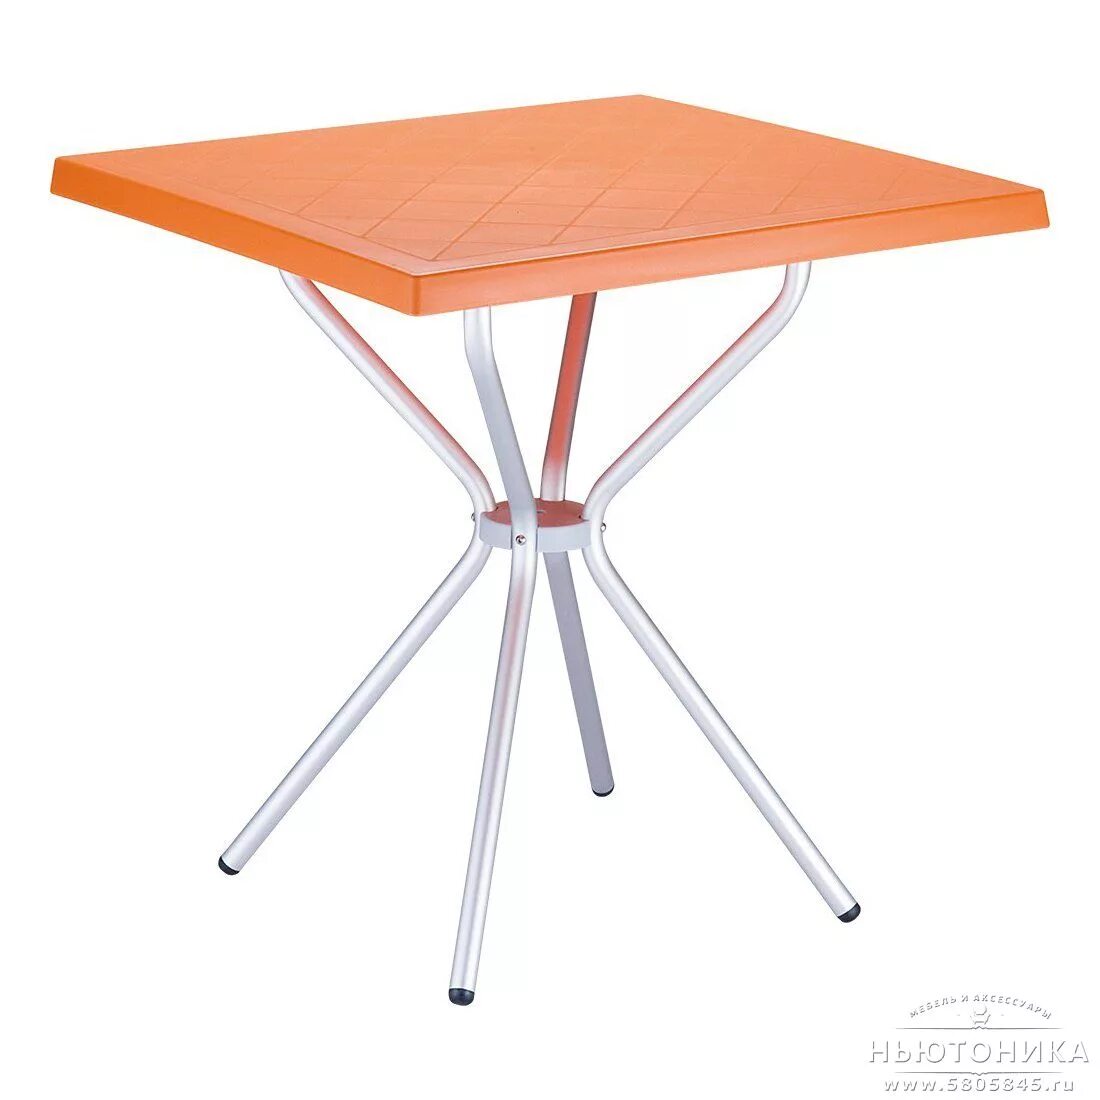 Стол для кафе 700х700. Стол Siesta. Стол Сиеста 85. Оранжевый стол. Оранжевый столик